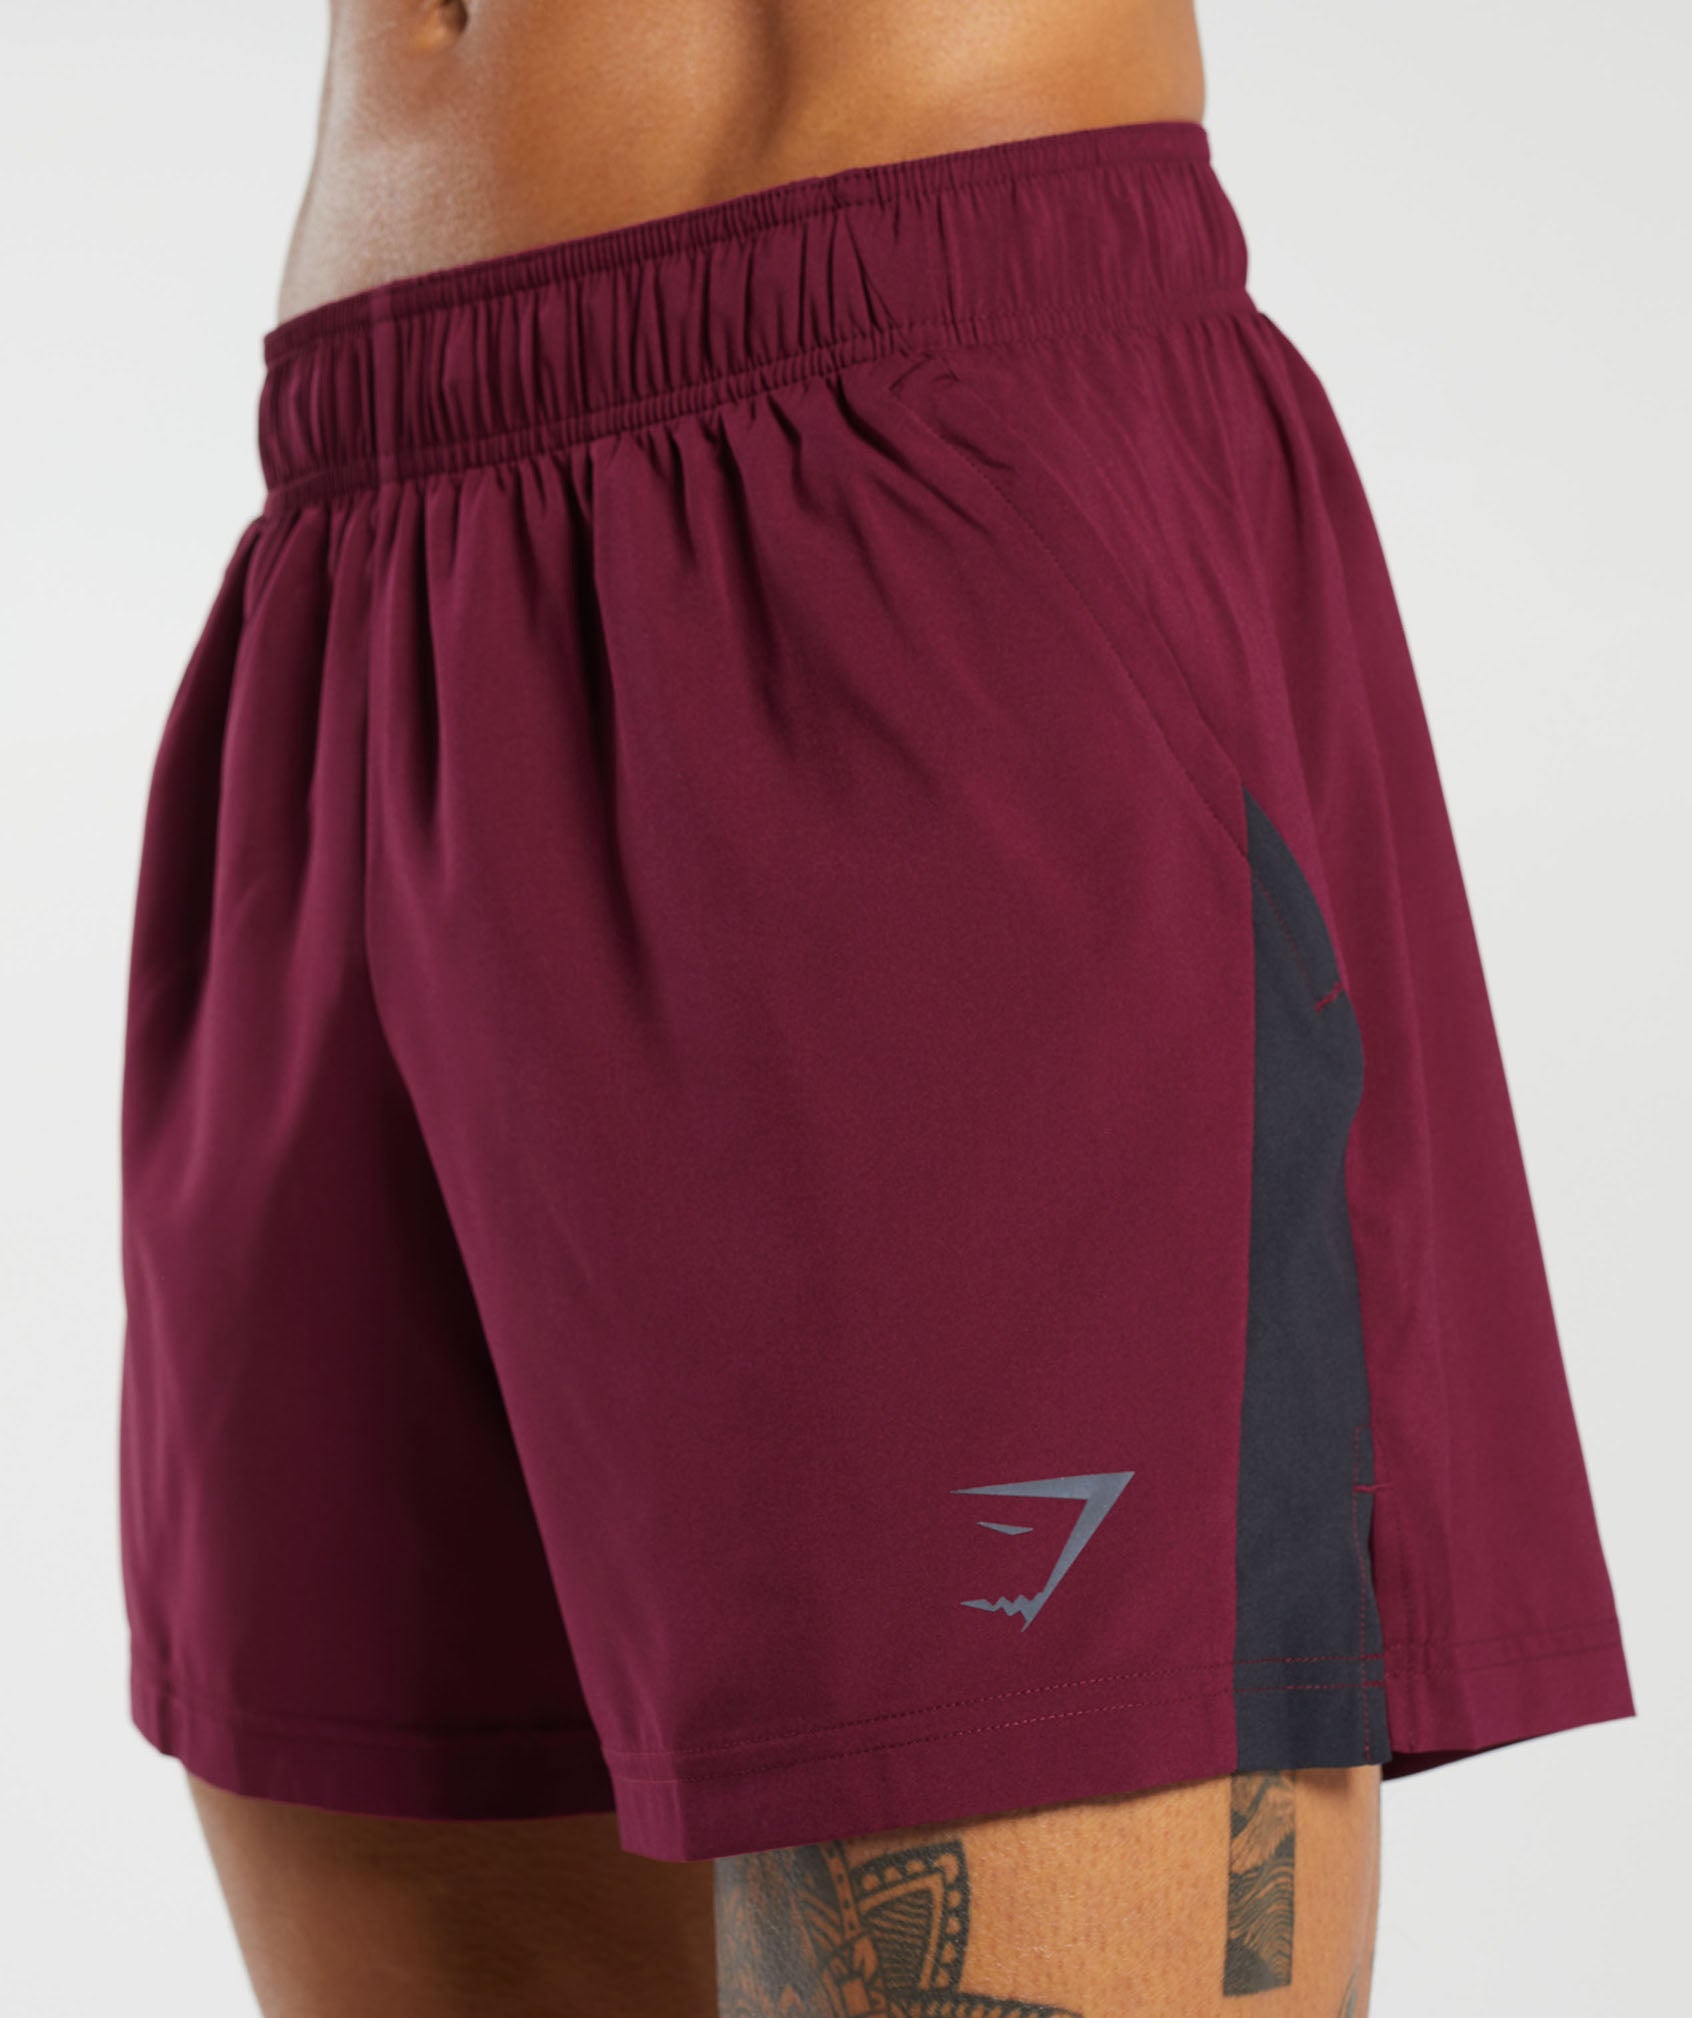 Gymshark Sport 5 Shorts - Plum Pink/Black